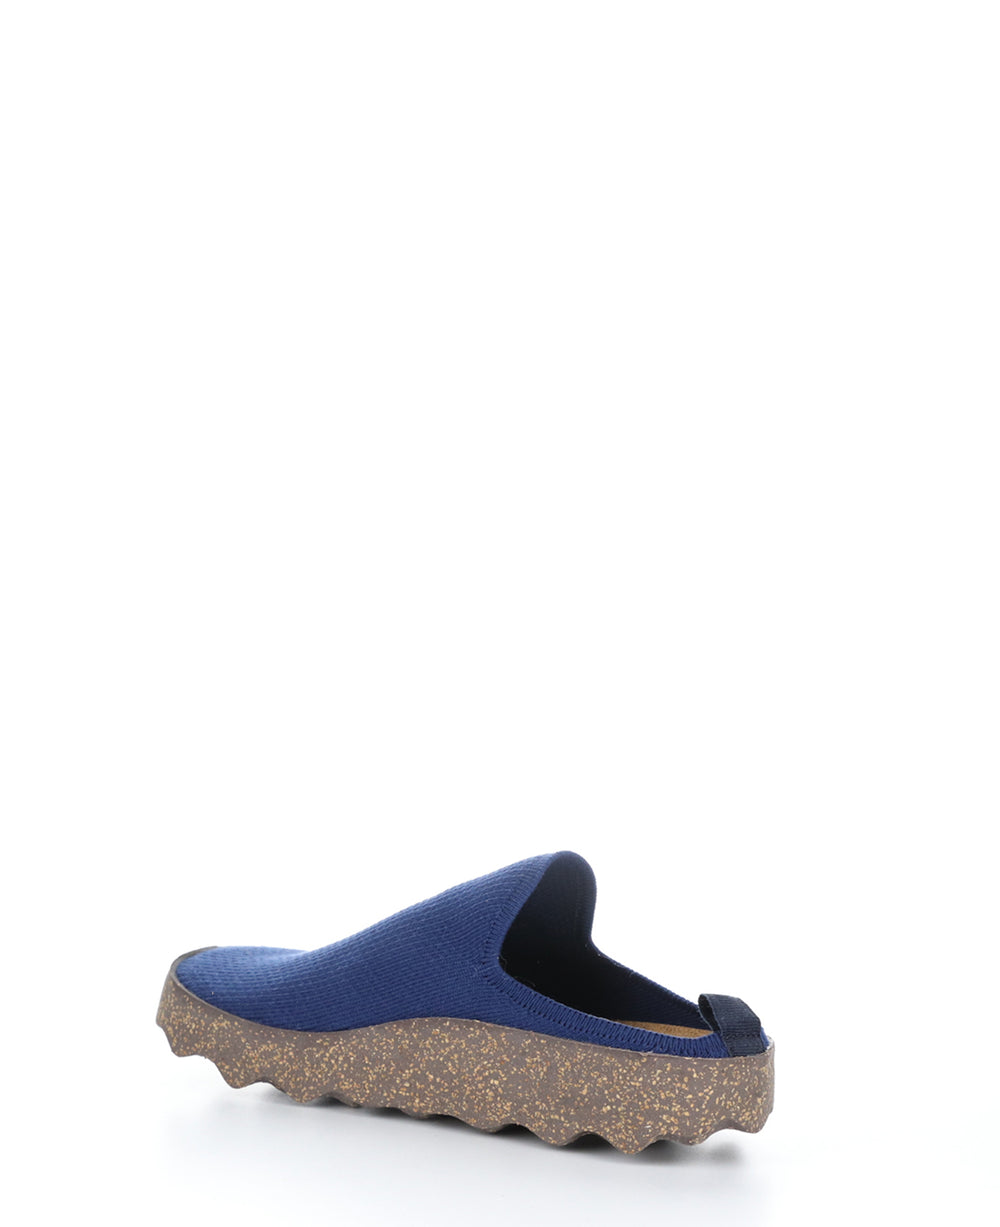 CLOG105ASPM NAVY/BROWN Slip-on Shoes|CLOG105ASPM Chaussures à Bout Rond in Bleu